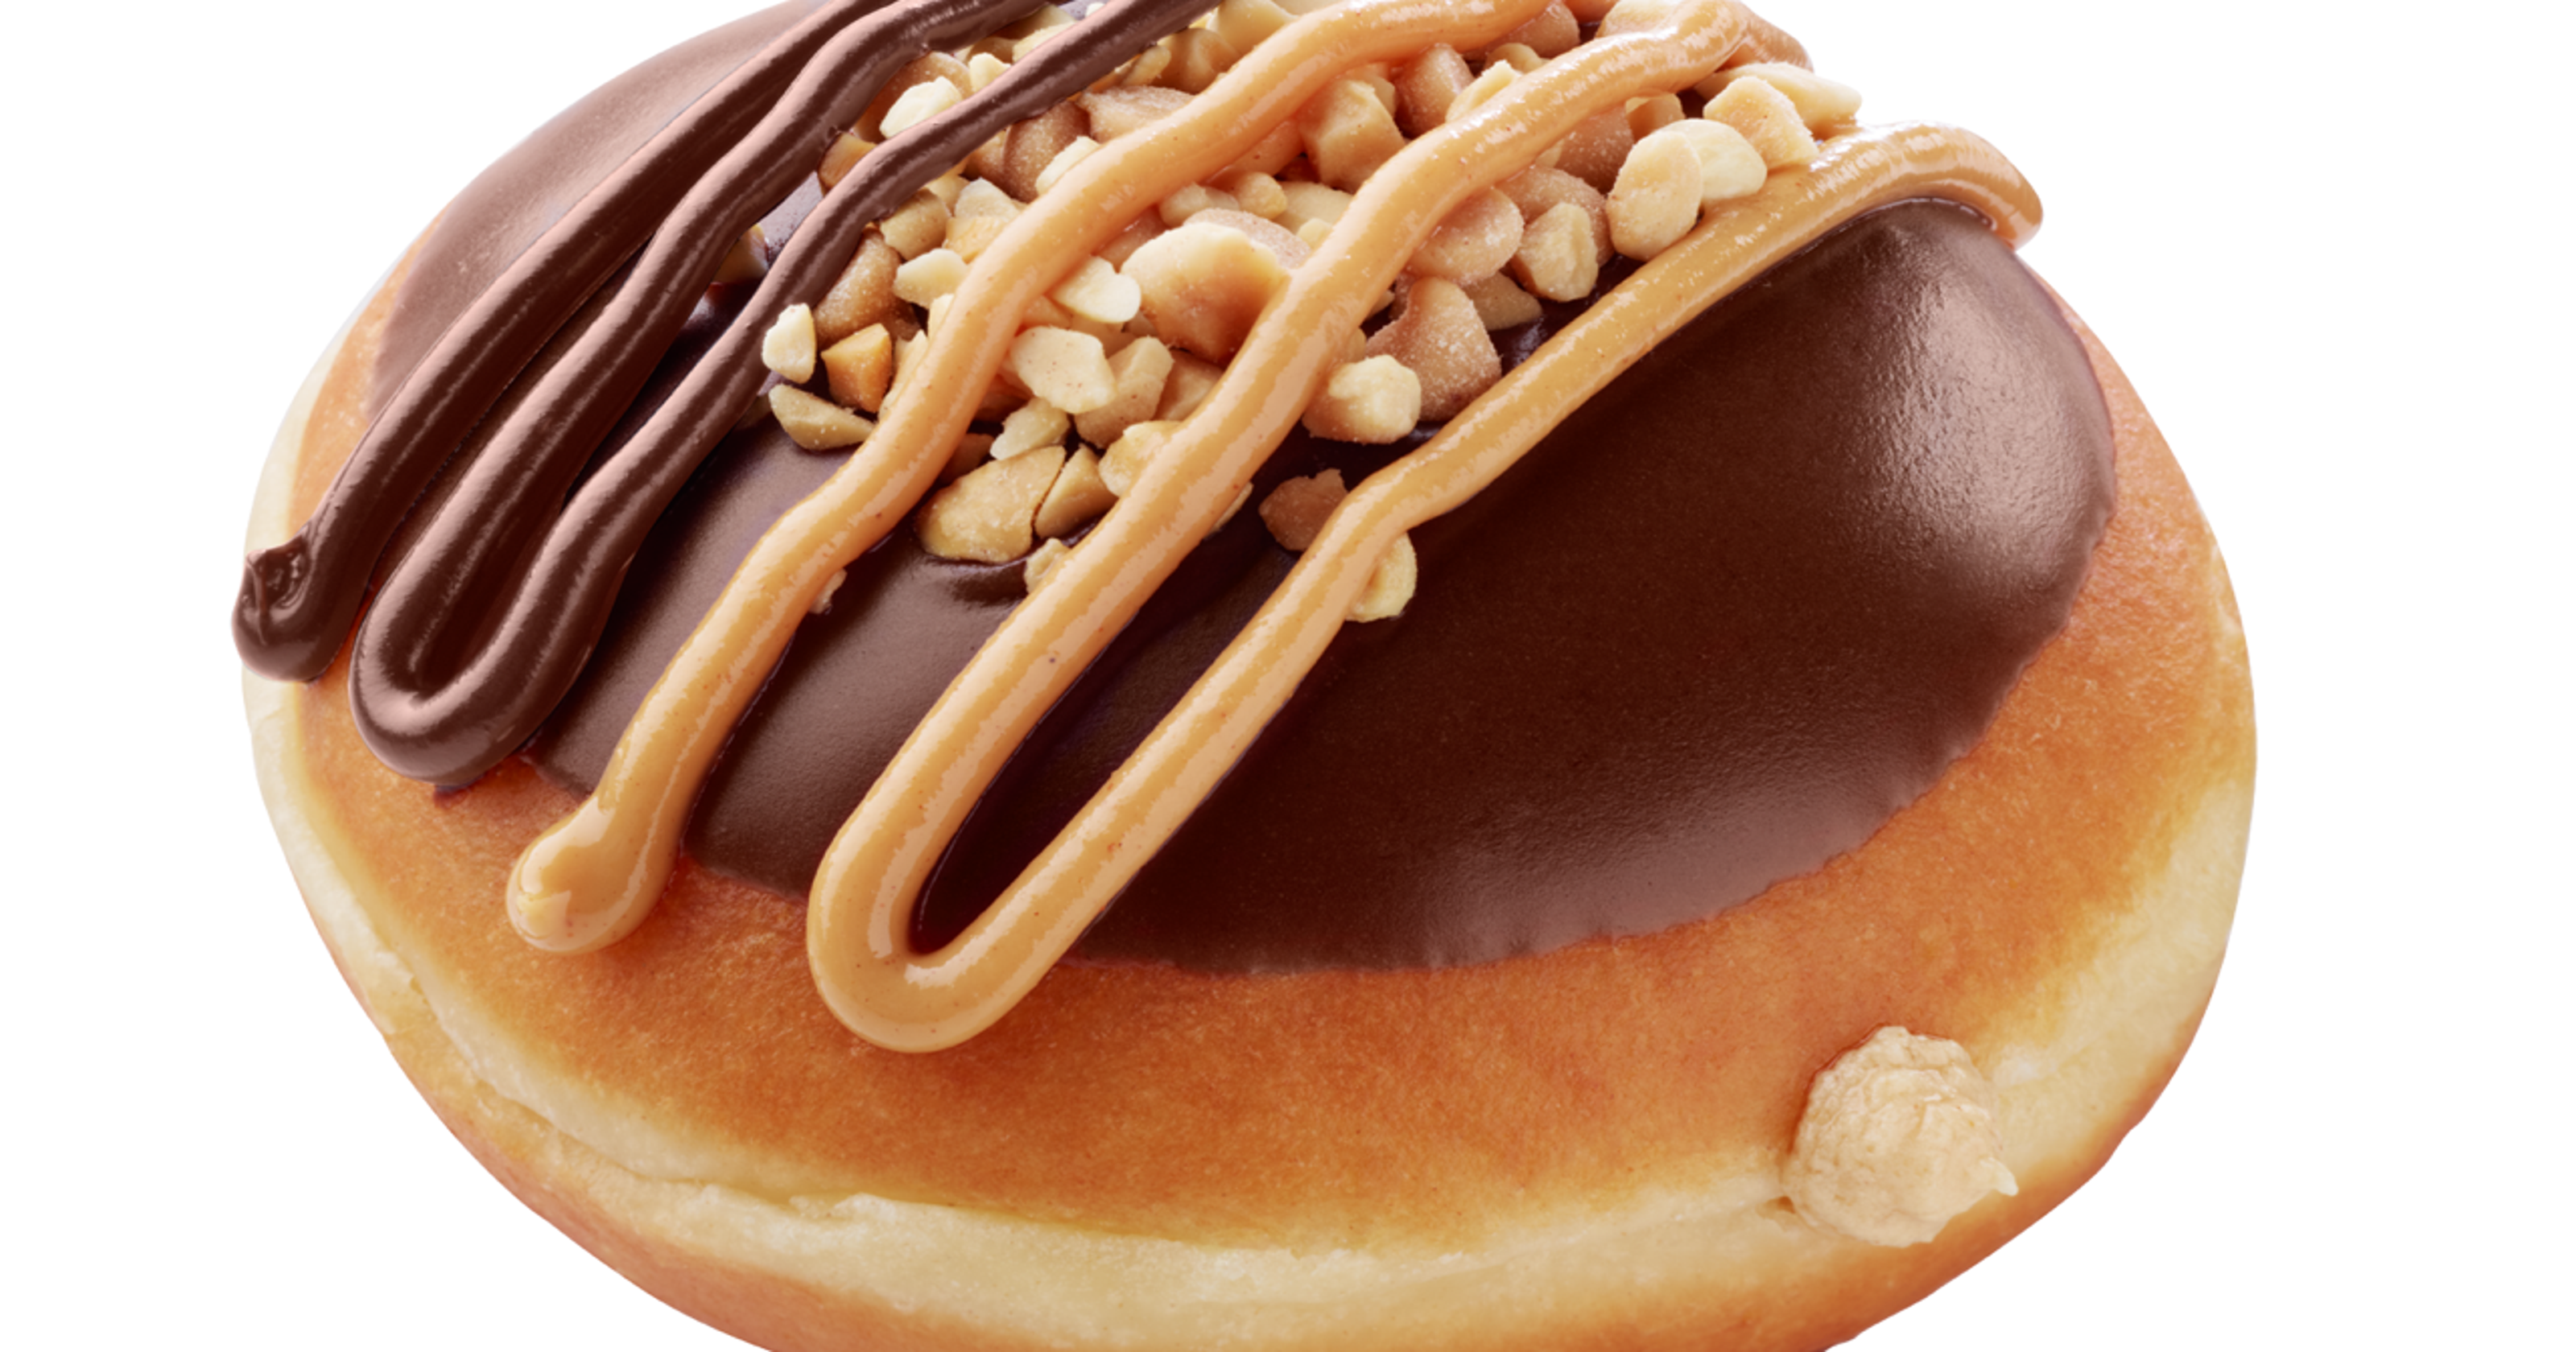 Krispy Kreme Reeses Peanut Butter Come Together In The Uber Doughnut